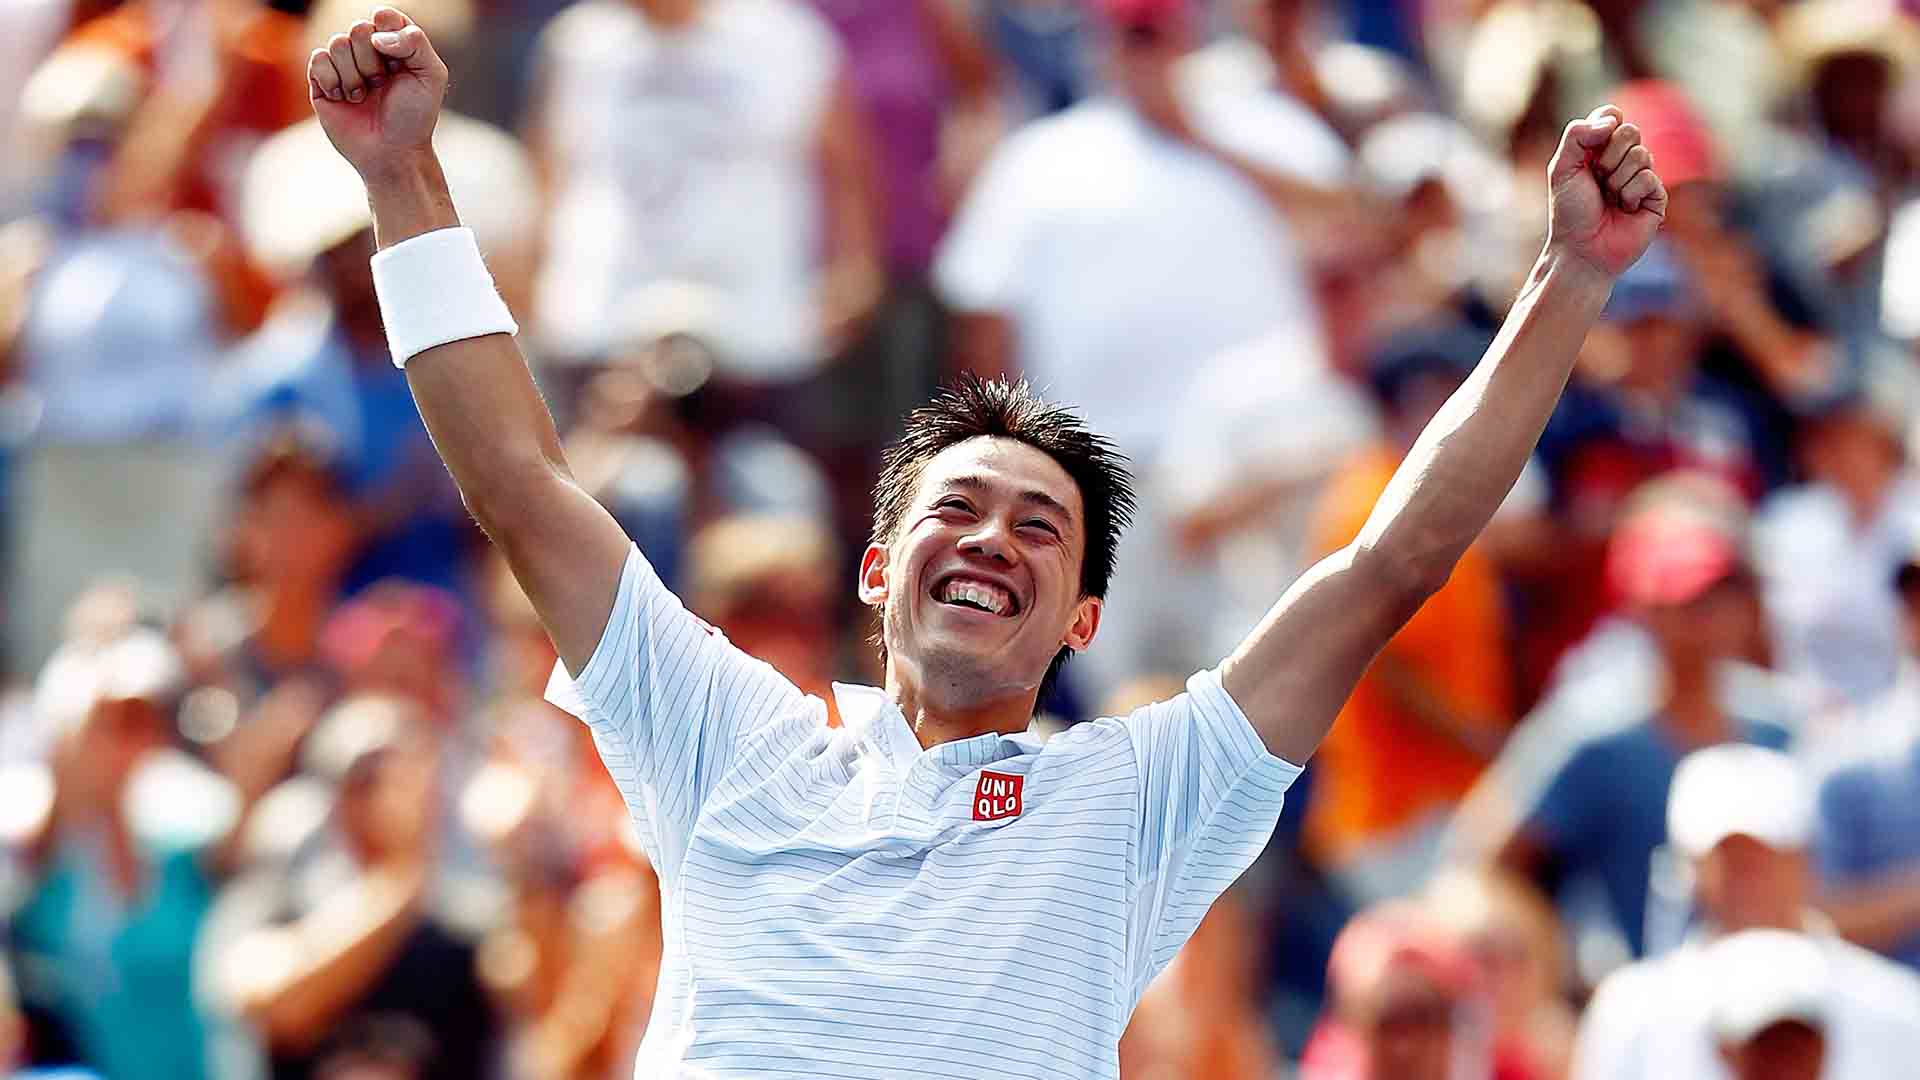 Kei Nishikori beats Novak Djokovic in four sets to reach his maiden Grand Slam final at the US Open.